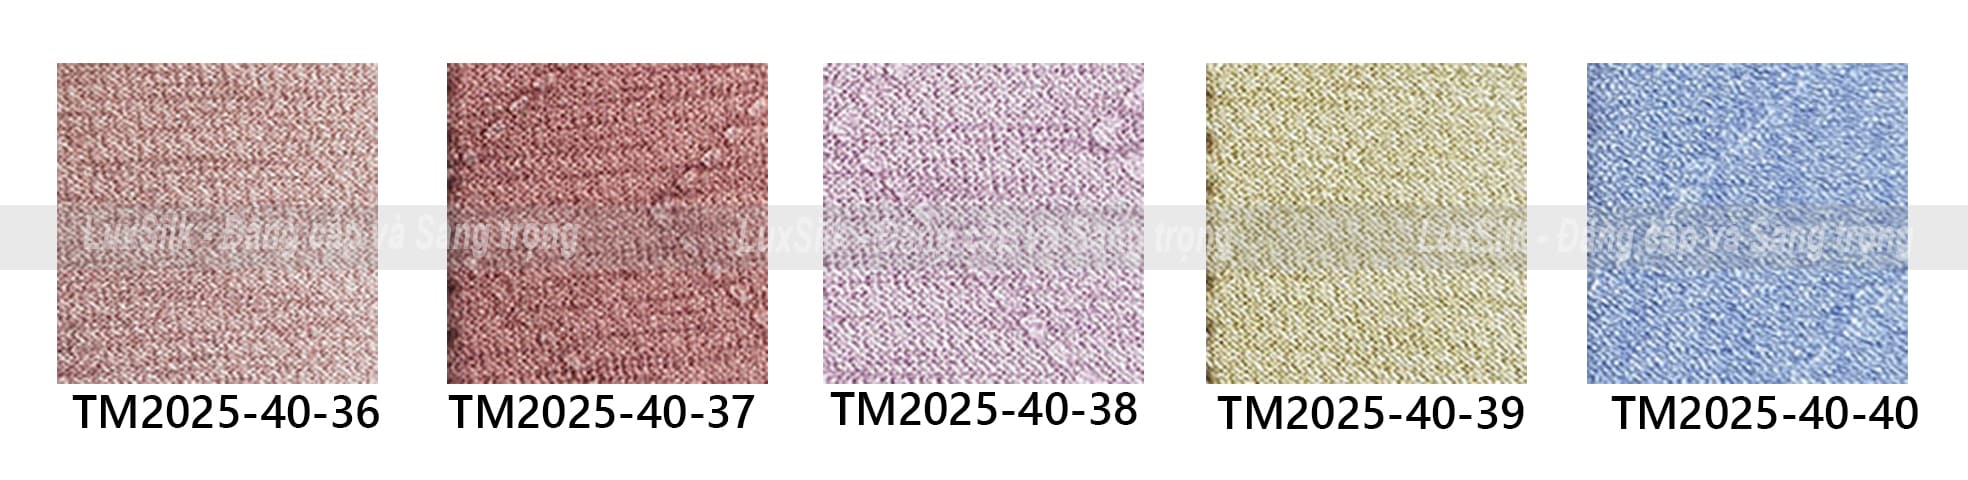 Rèm vải TM2025-40